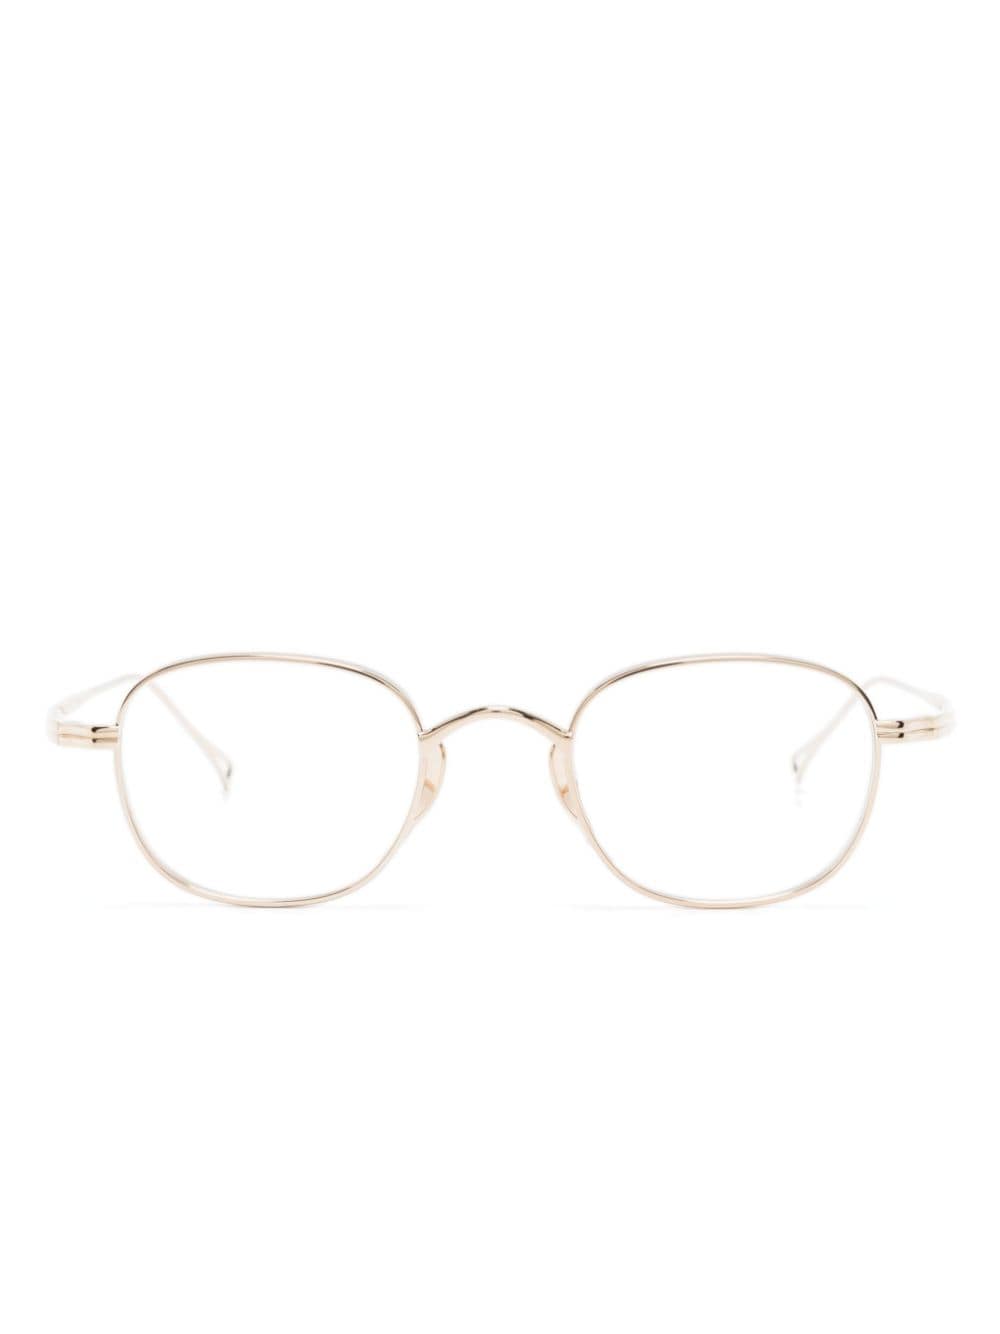 Kame Mannen Kmn/114 Square-frame Glasses In Neutral